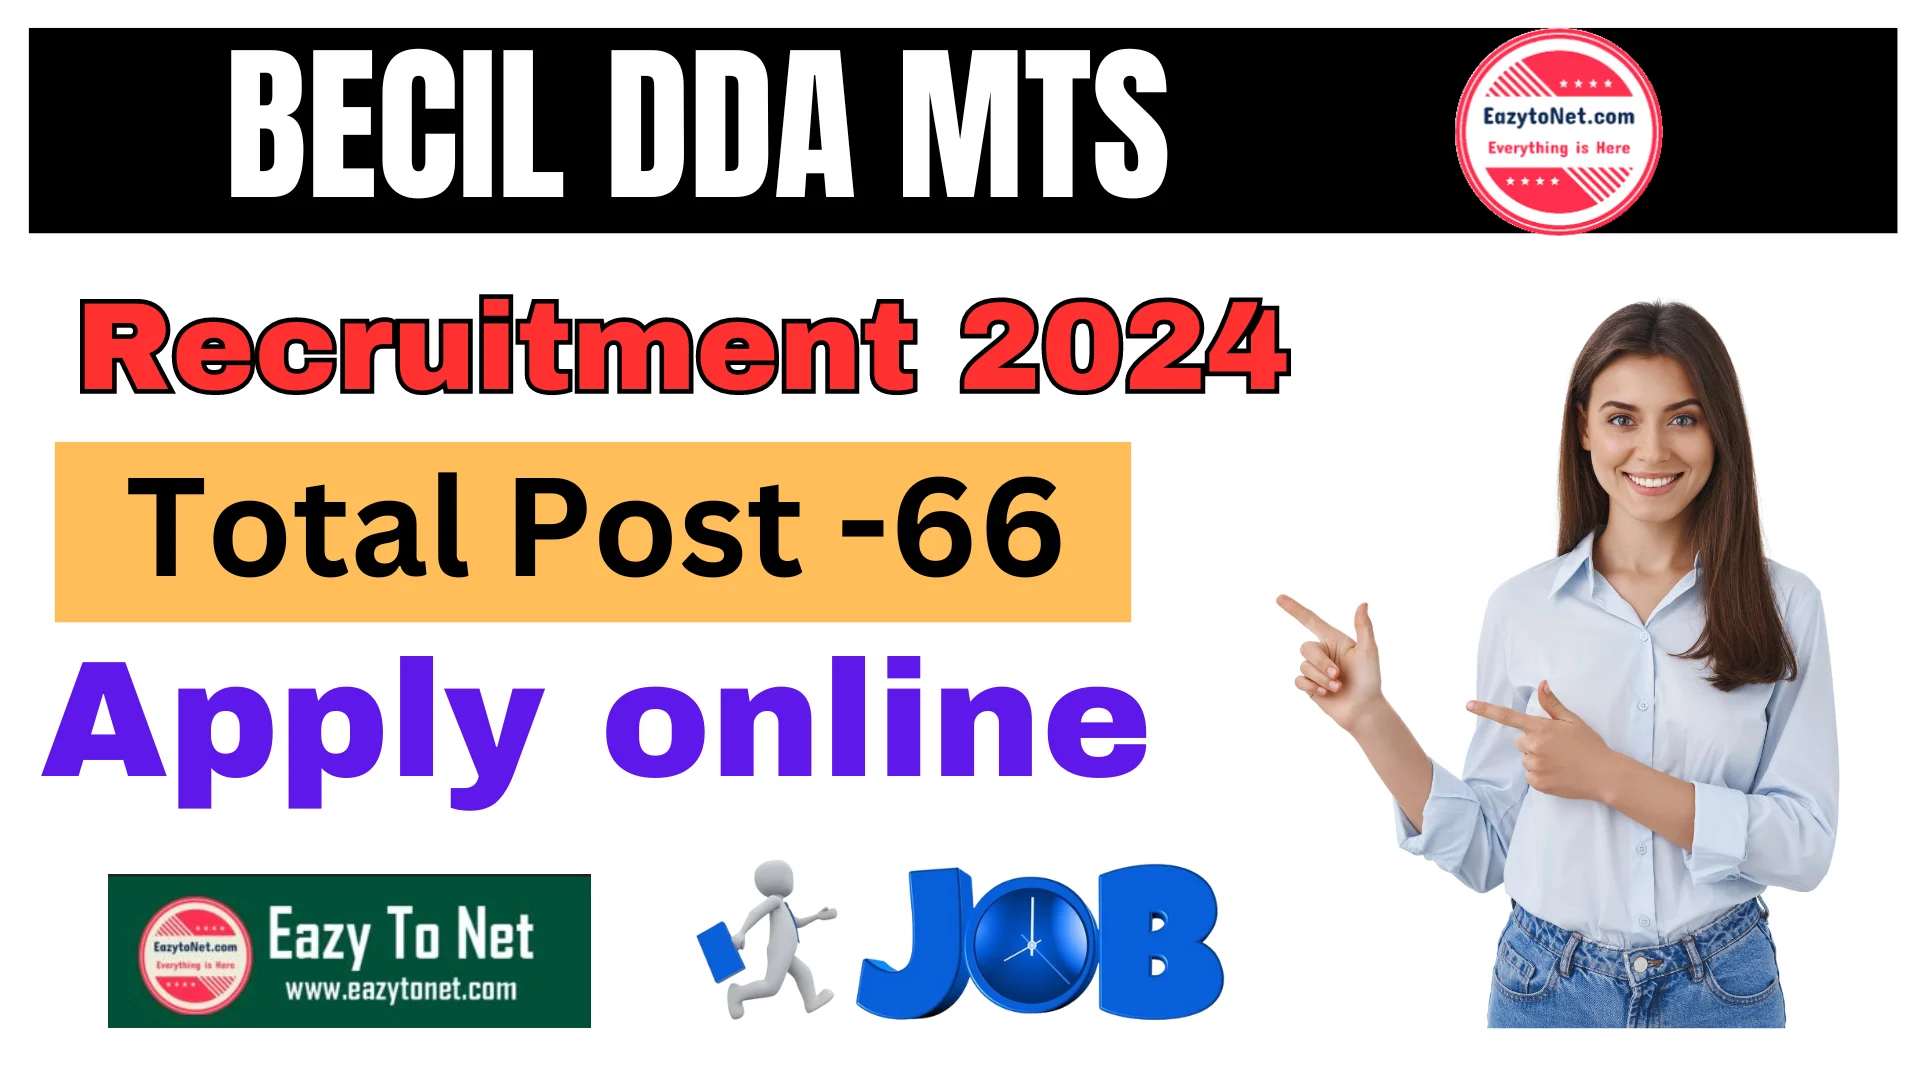 BECIL DDA MTS Recruitment 2024: How to Apply BECIL DDA MTS Vacancy 2024, Notification Out